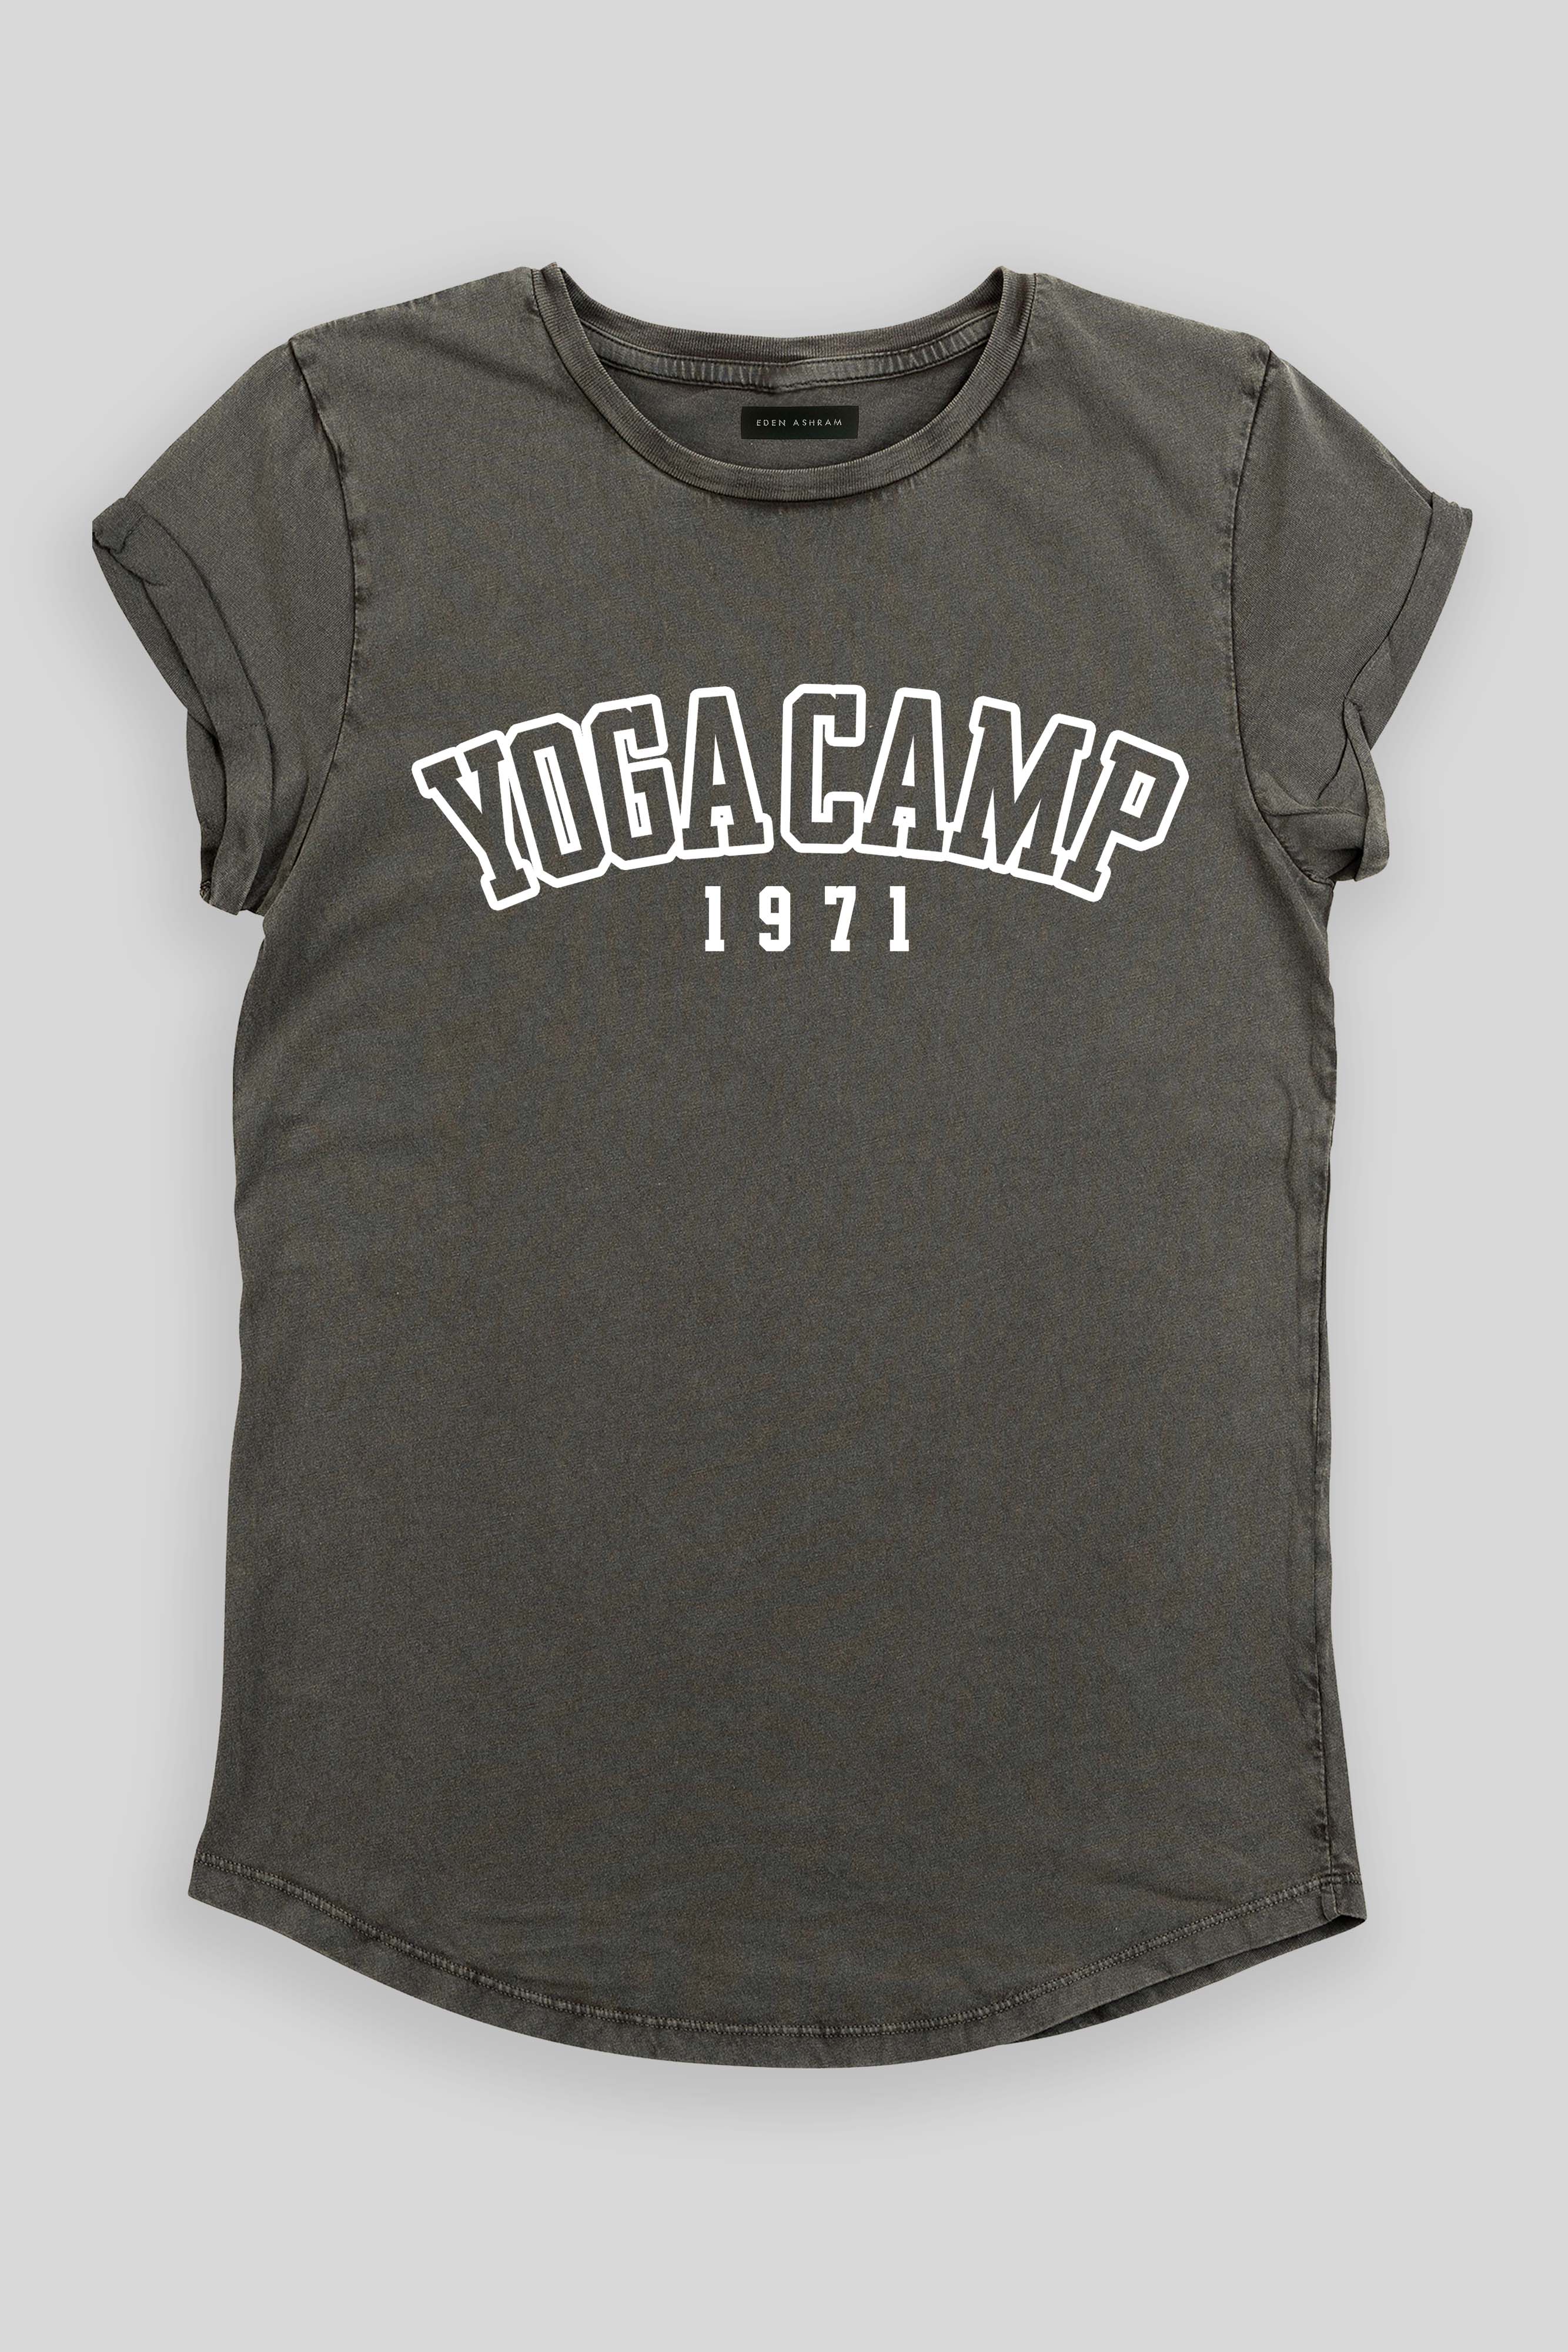 EDEN ASHRAM Yoga Camp 1971 Rolled Sleeve T-Shirt Stonewash Grey